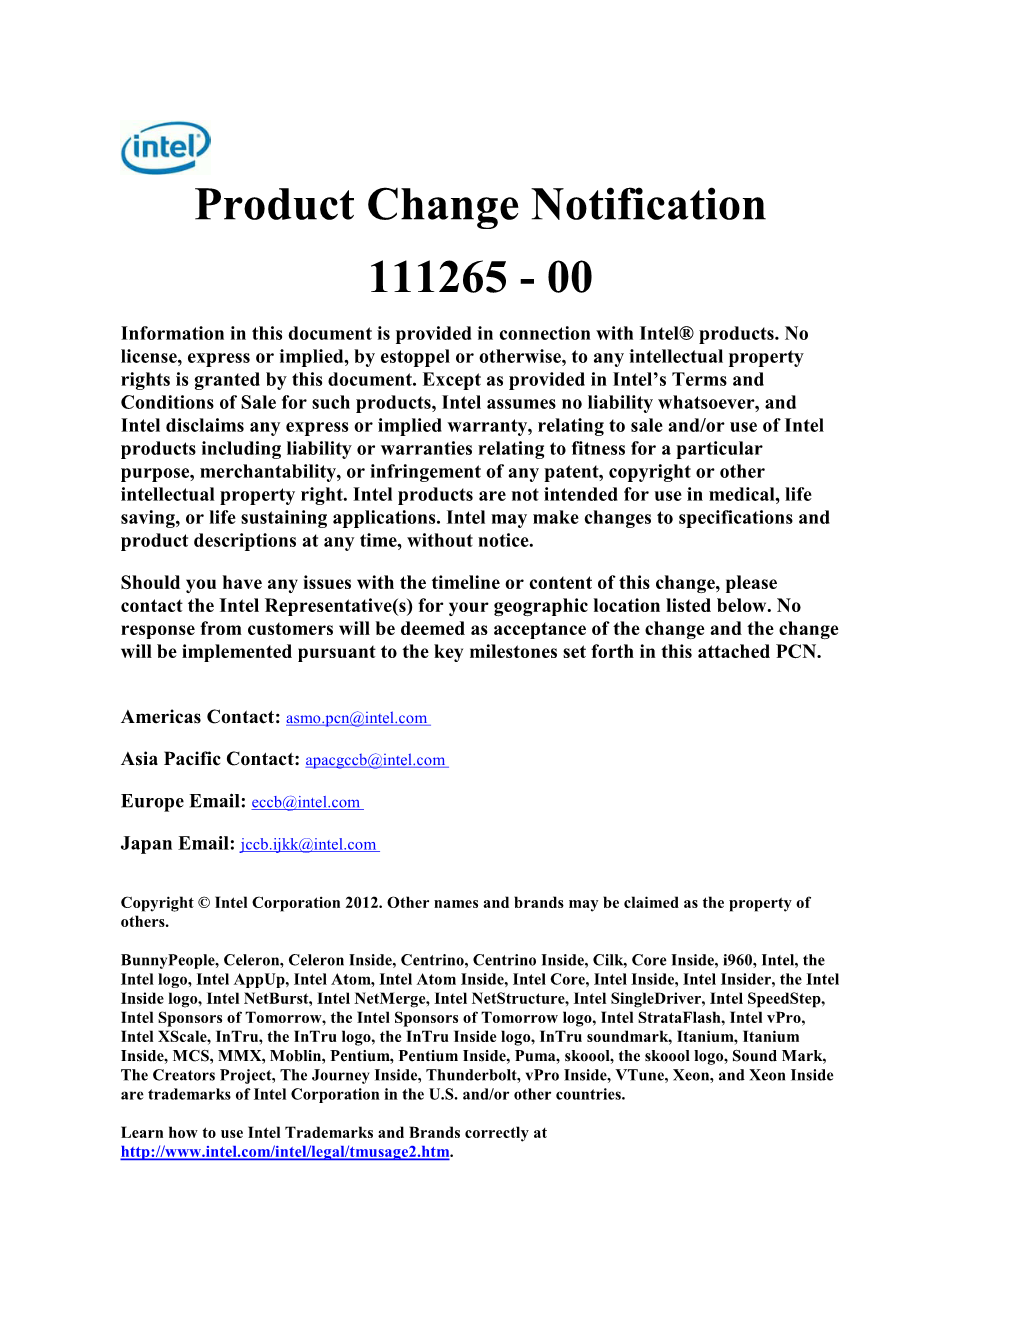 Product Change Notification 111265